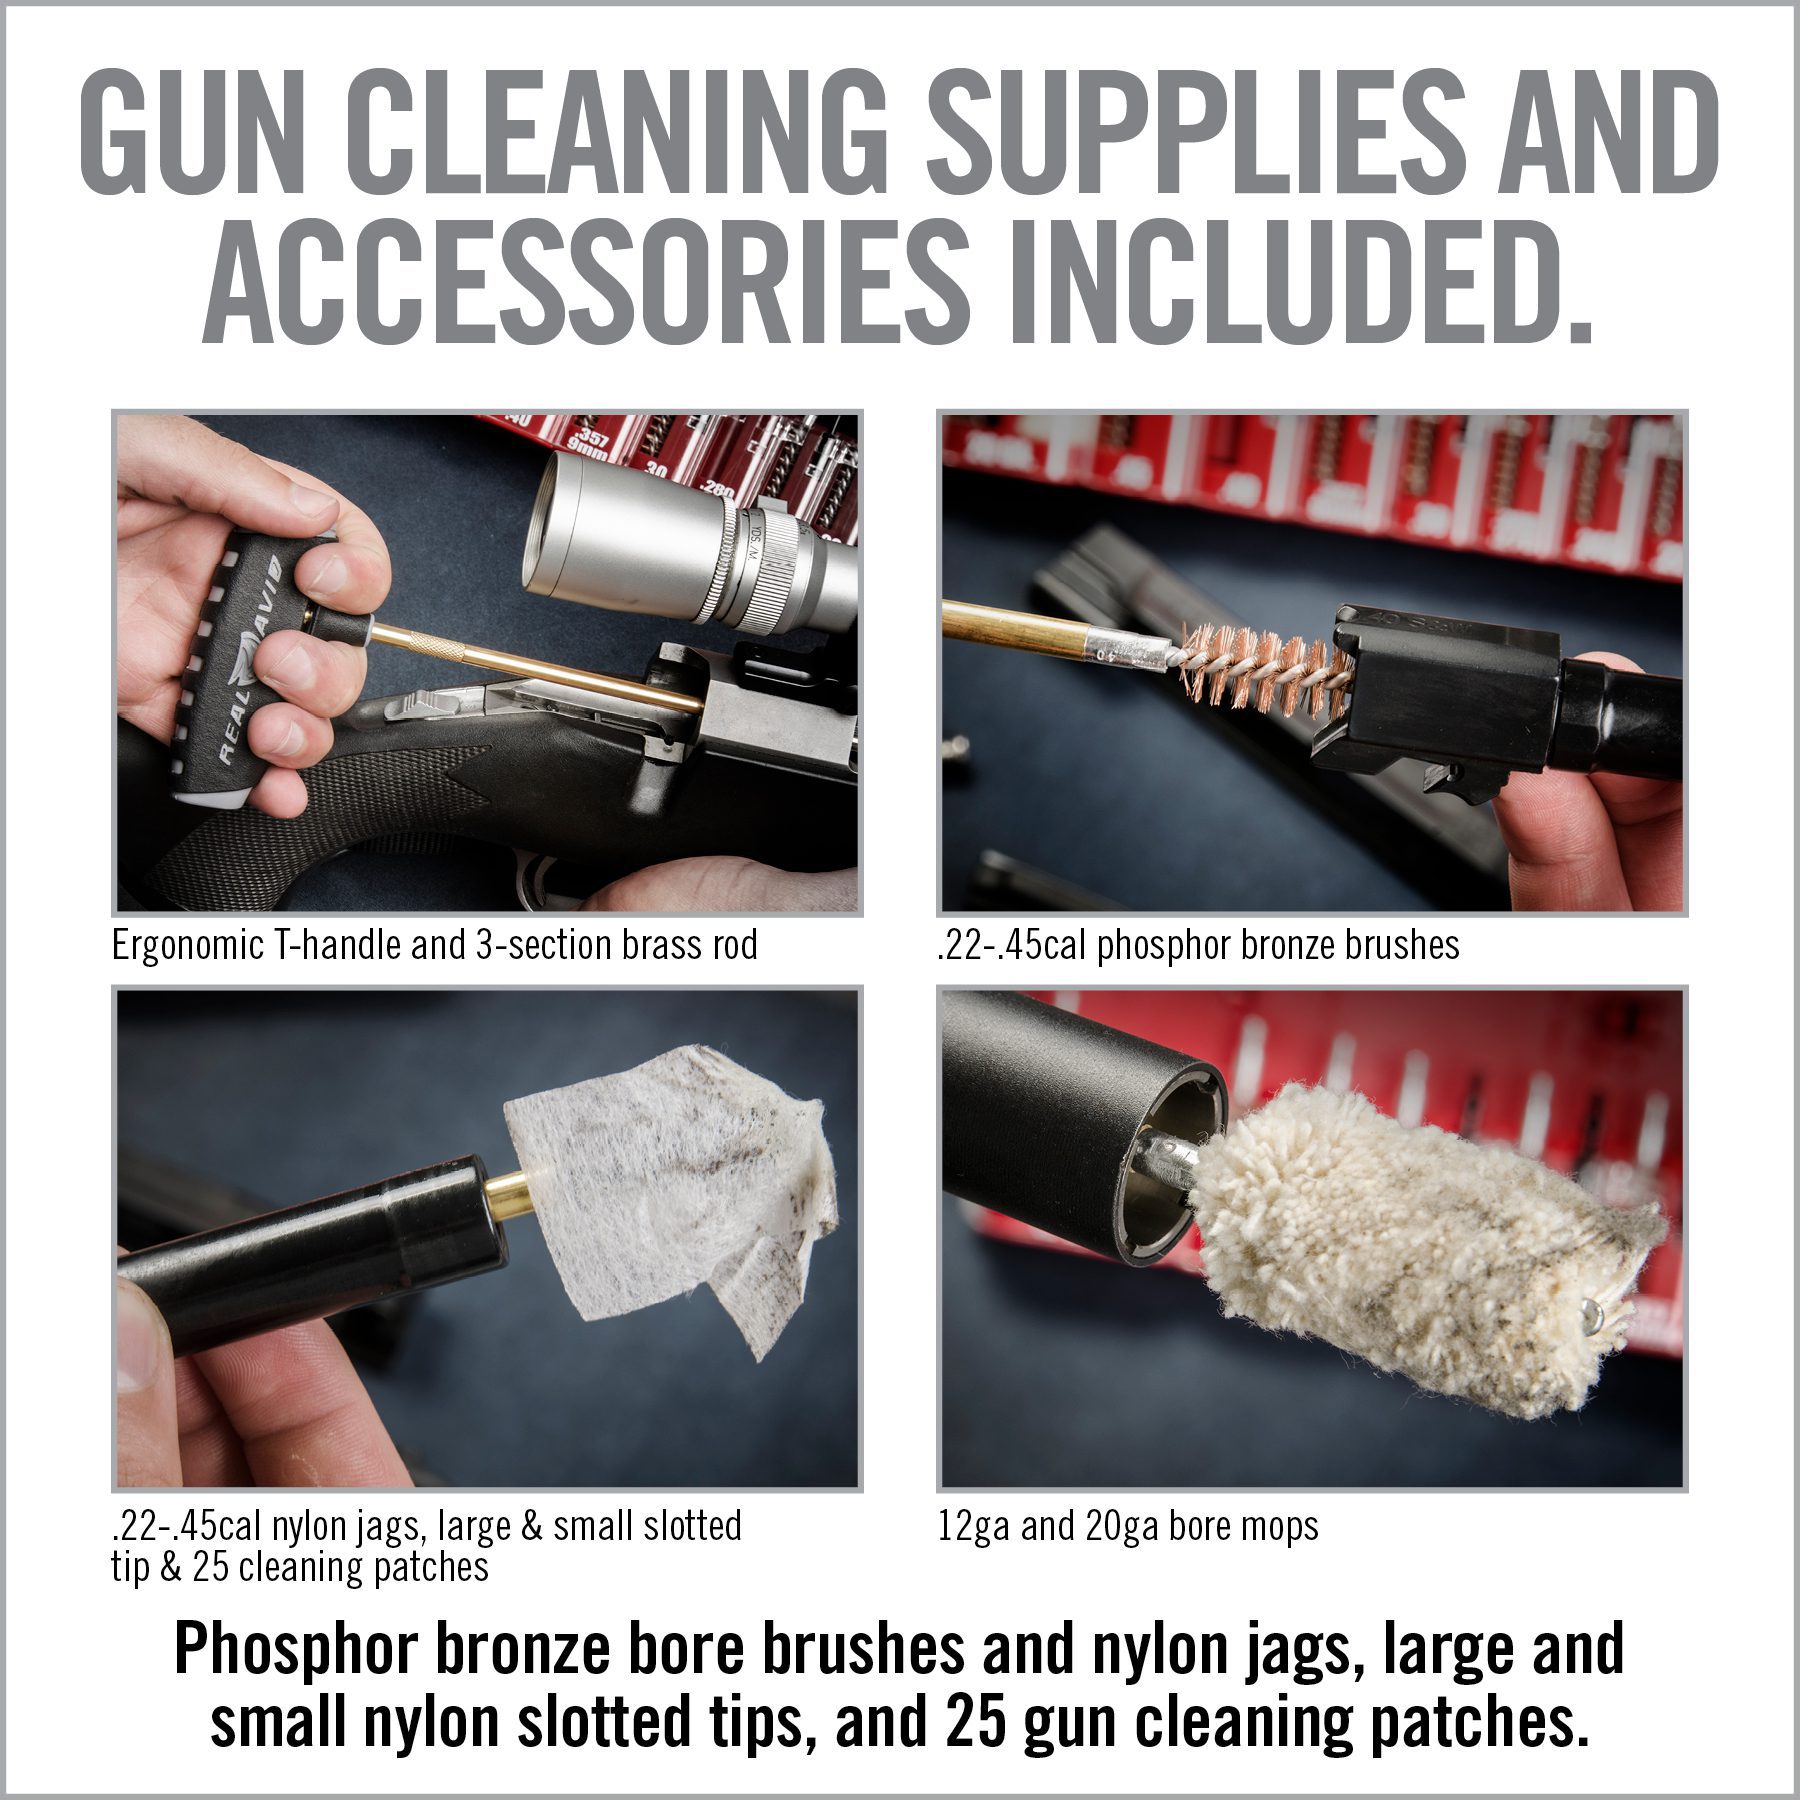 Gun Boss® Pro – Universal Cleaning Kit – REAL AVID®